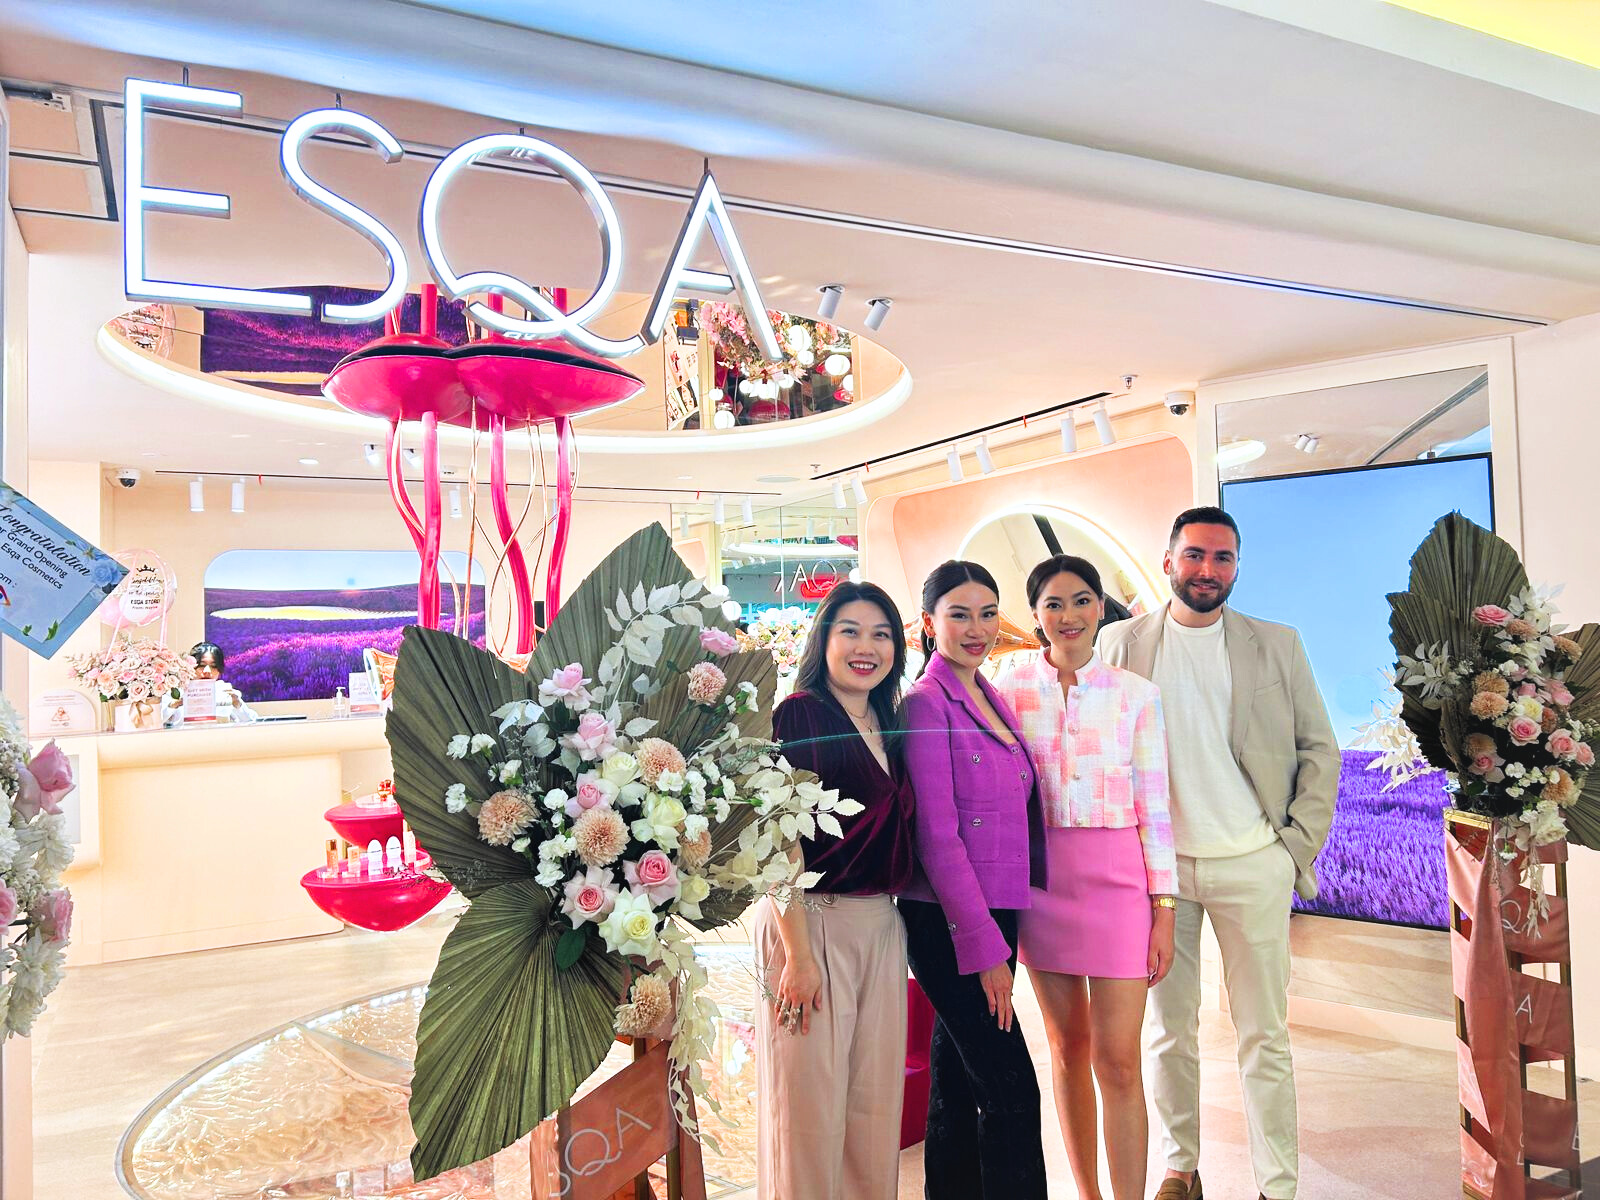 Pembukaan offline store pertama ESQA Cosmetics. Dari kiri, Regina Widjaja ( Chief Business Officer), Kezia Toemion (Co-Founder), Cindy Angelina (Co-Founder), dan David Teixeira (Chief Marketing Officer) juga turut hadir di acara peresmian. 